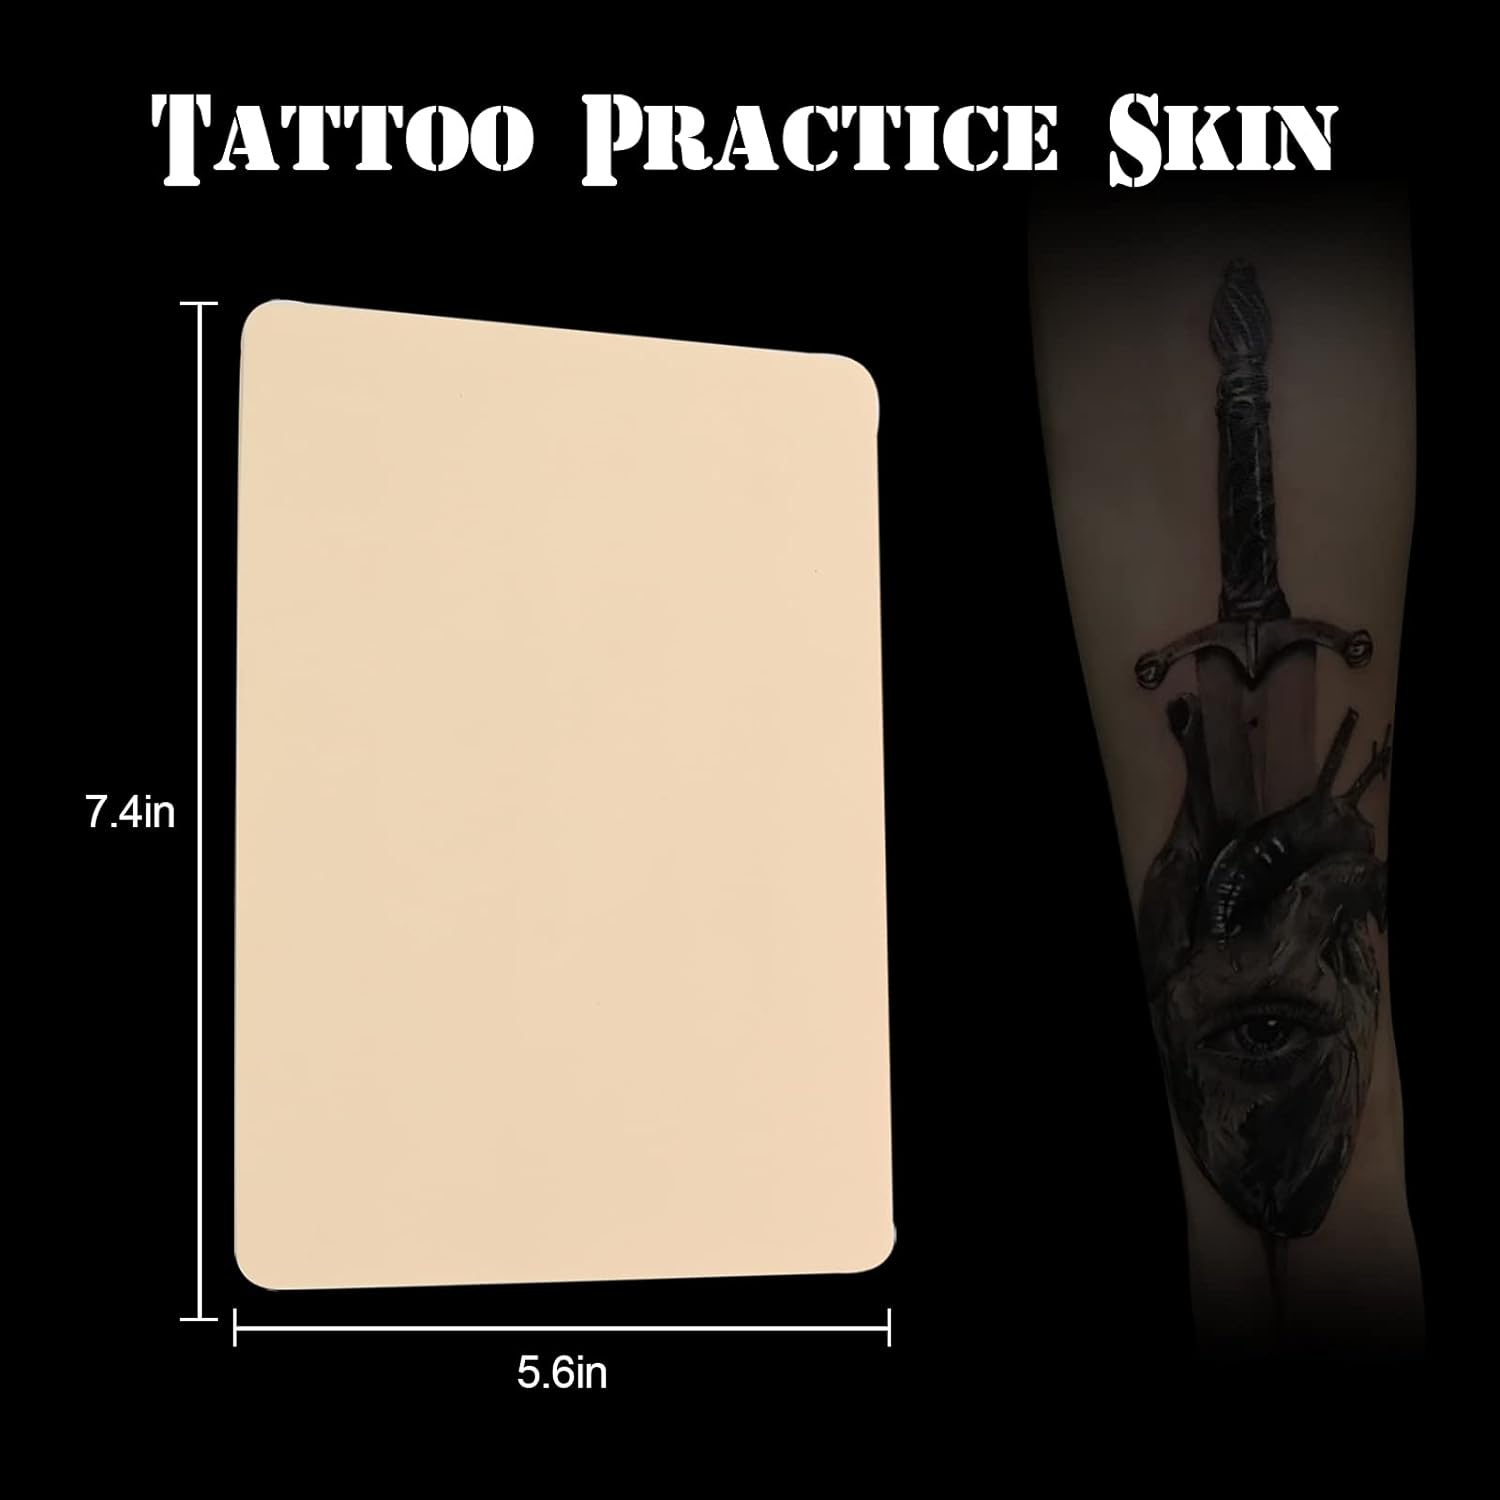 Tattoo Practice Skin